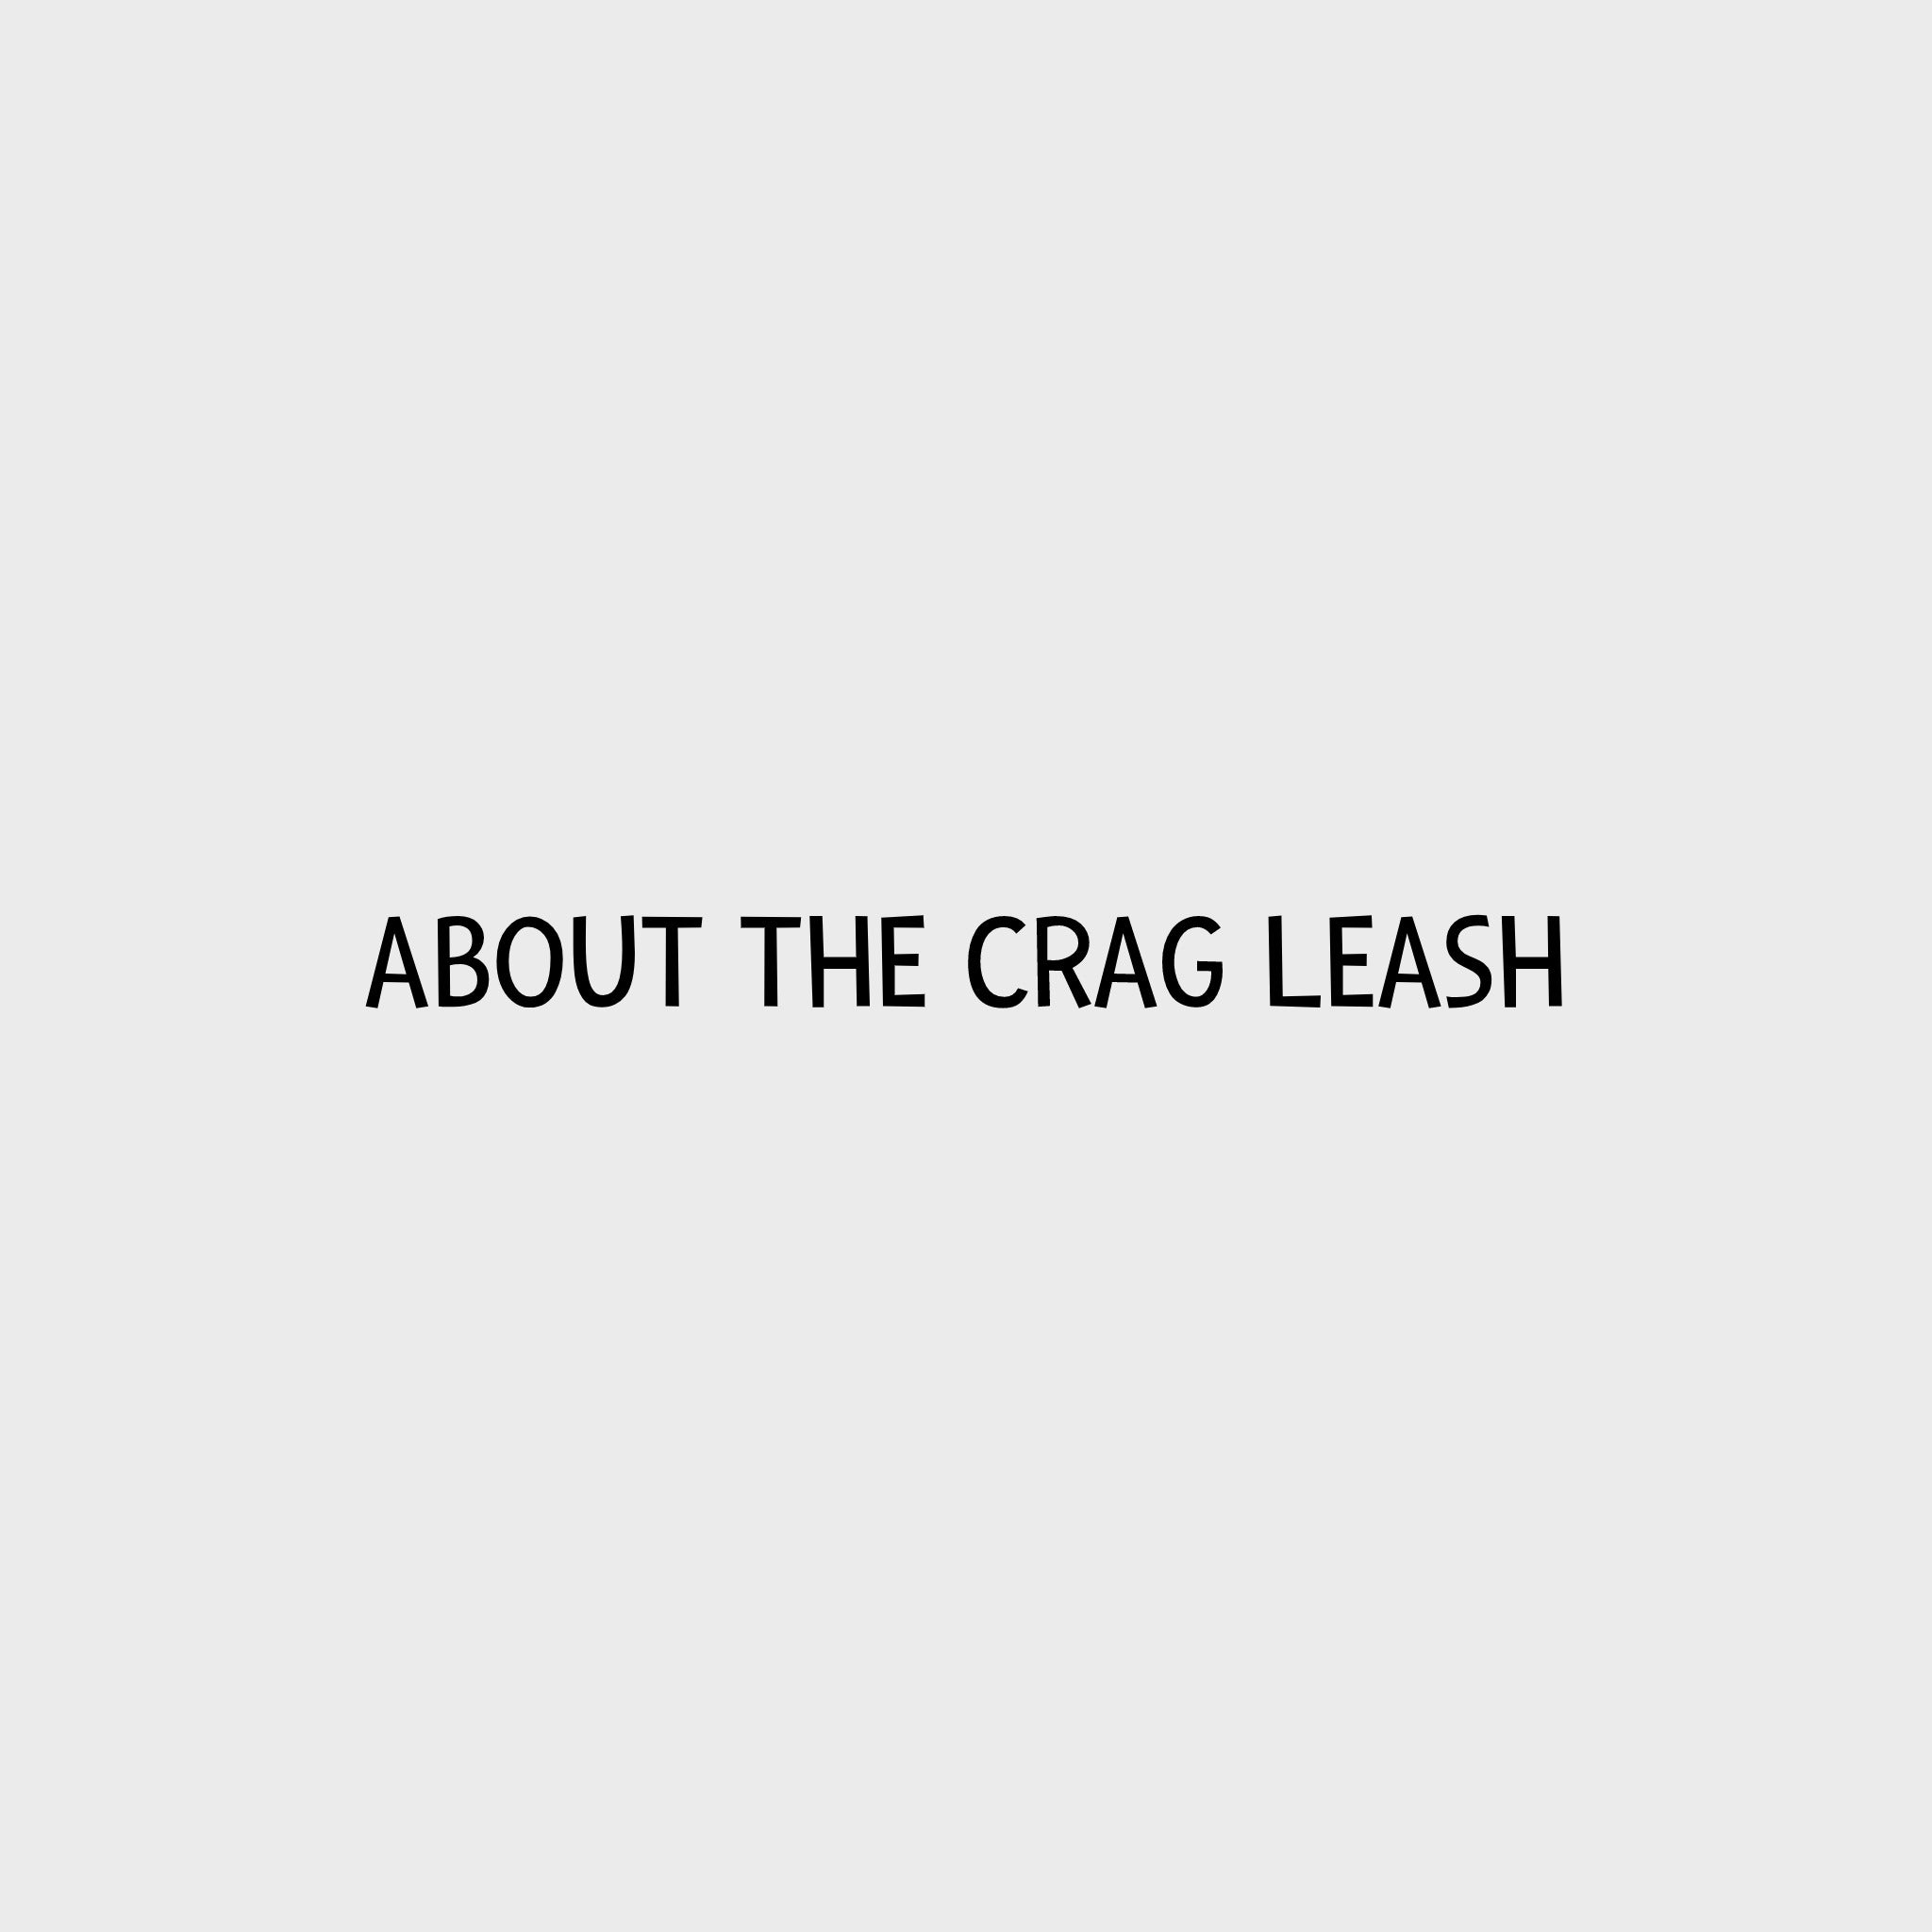 Video - Ruffwear Crag Leash